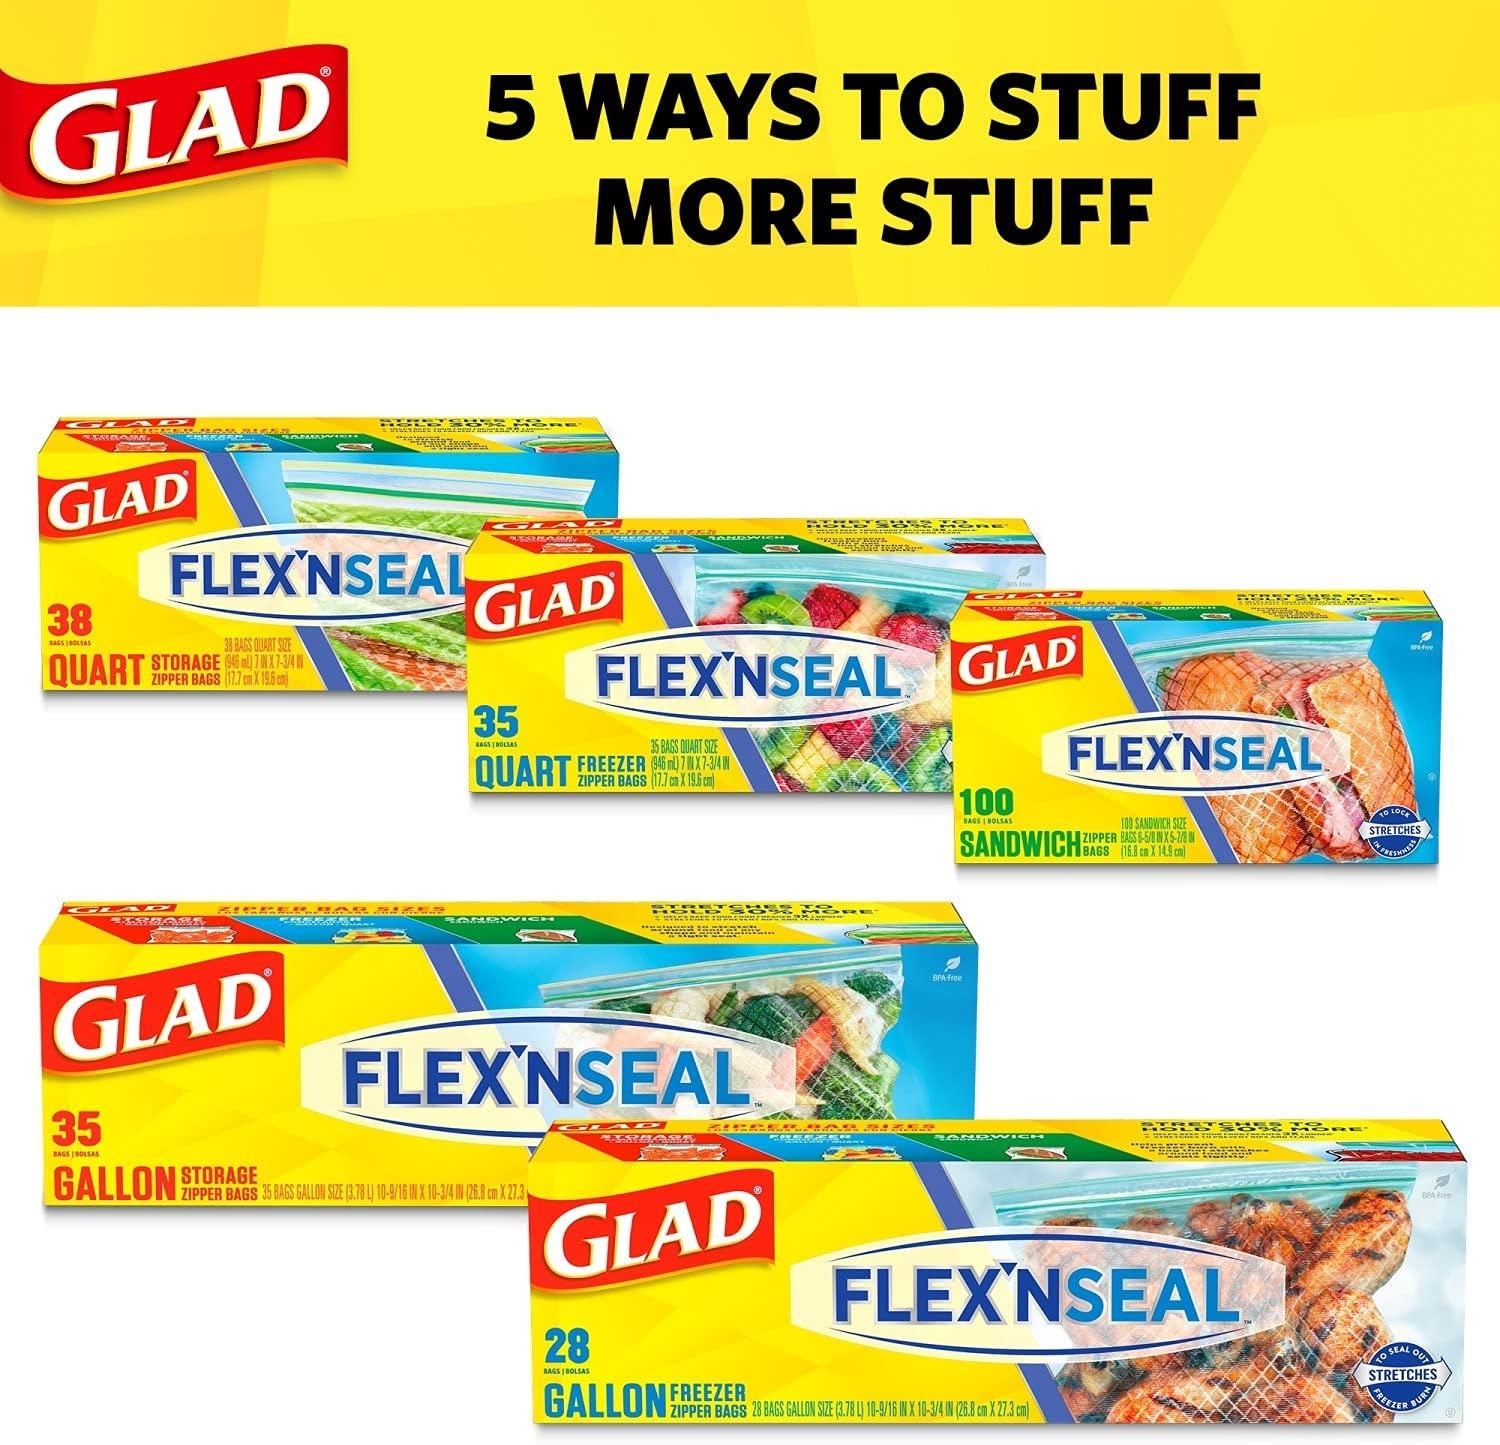 Glad FLEXN SEAL Gallon Freezer Zipper Bags, 28 Count (Pack of 4